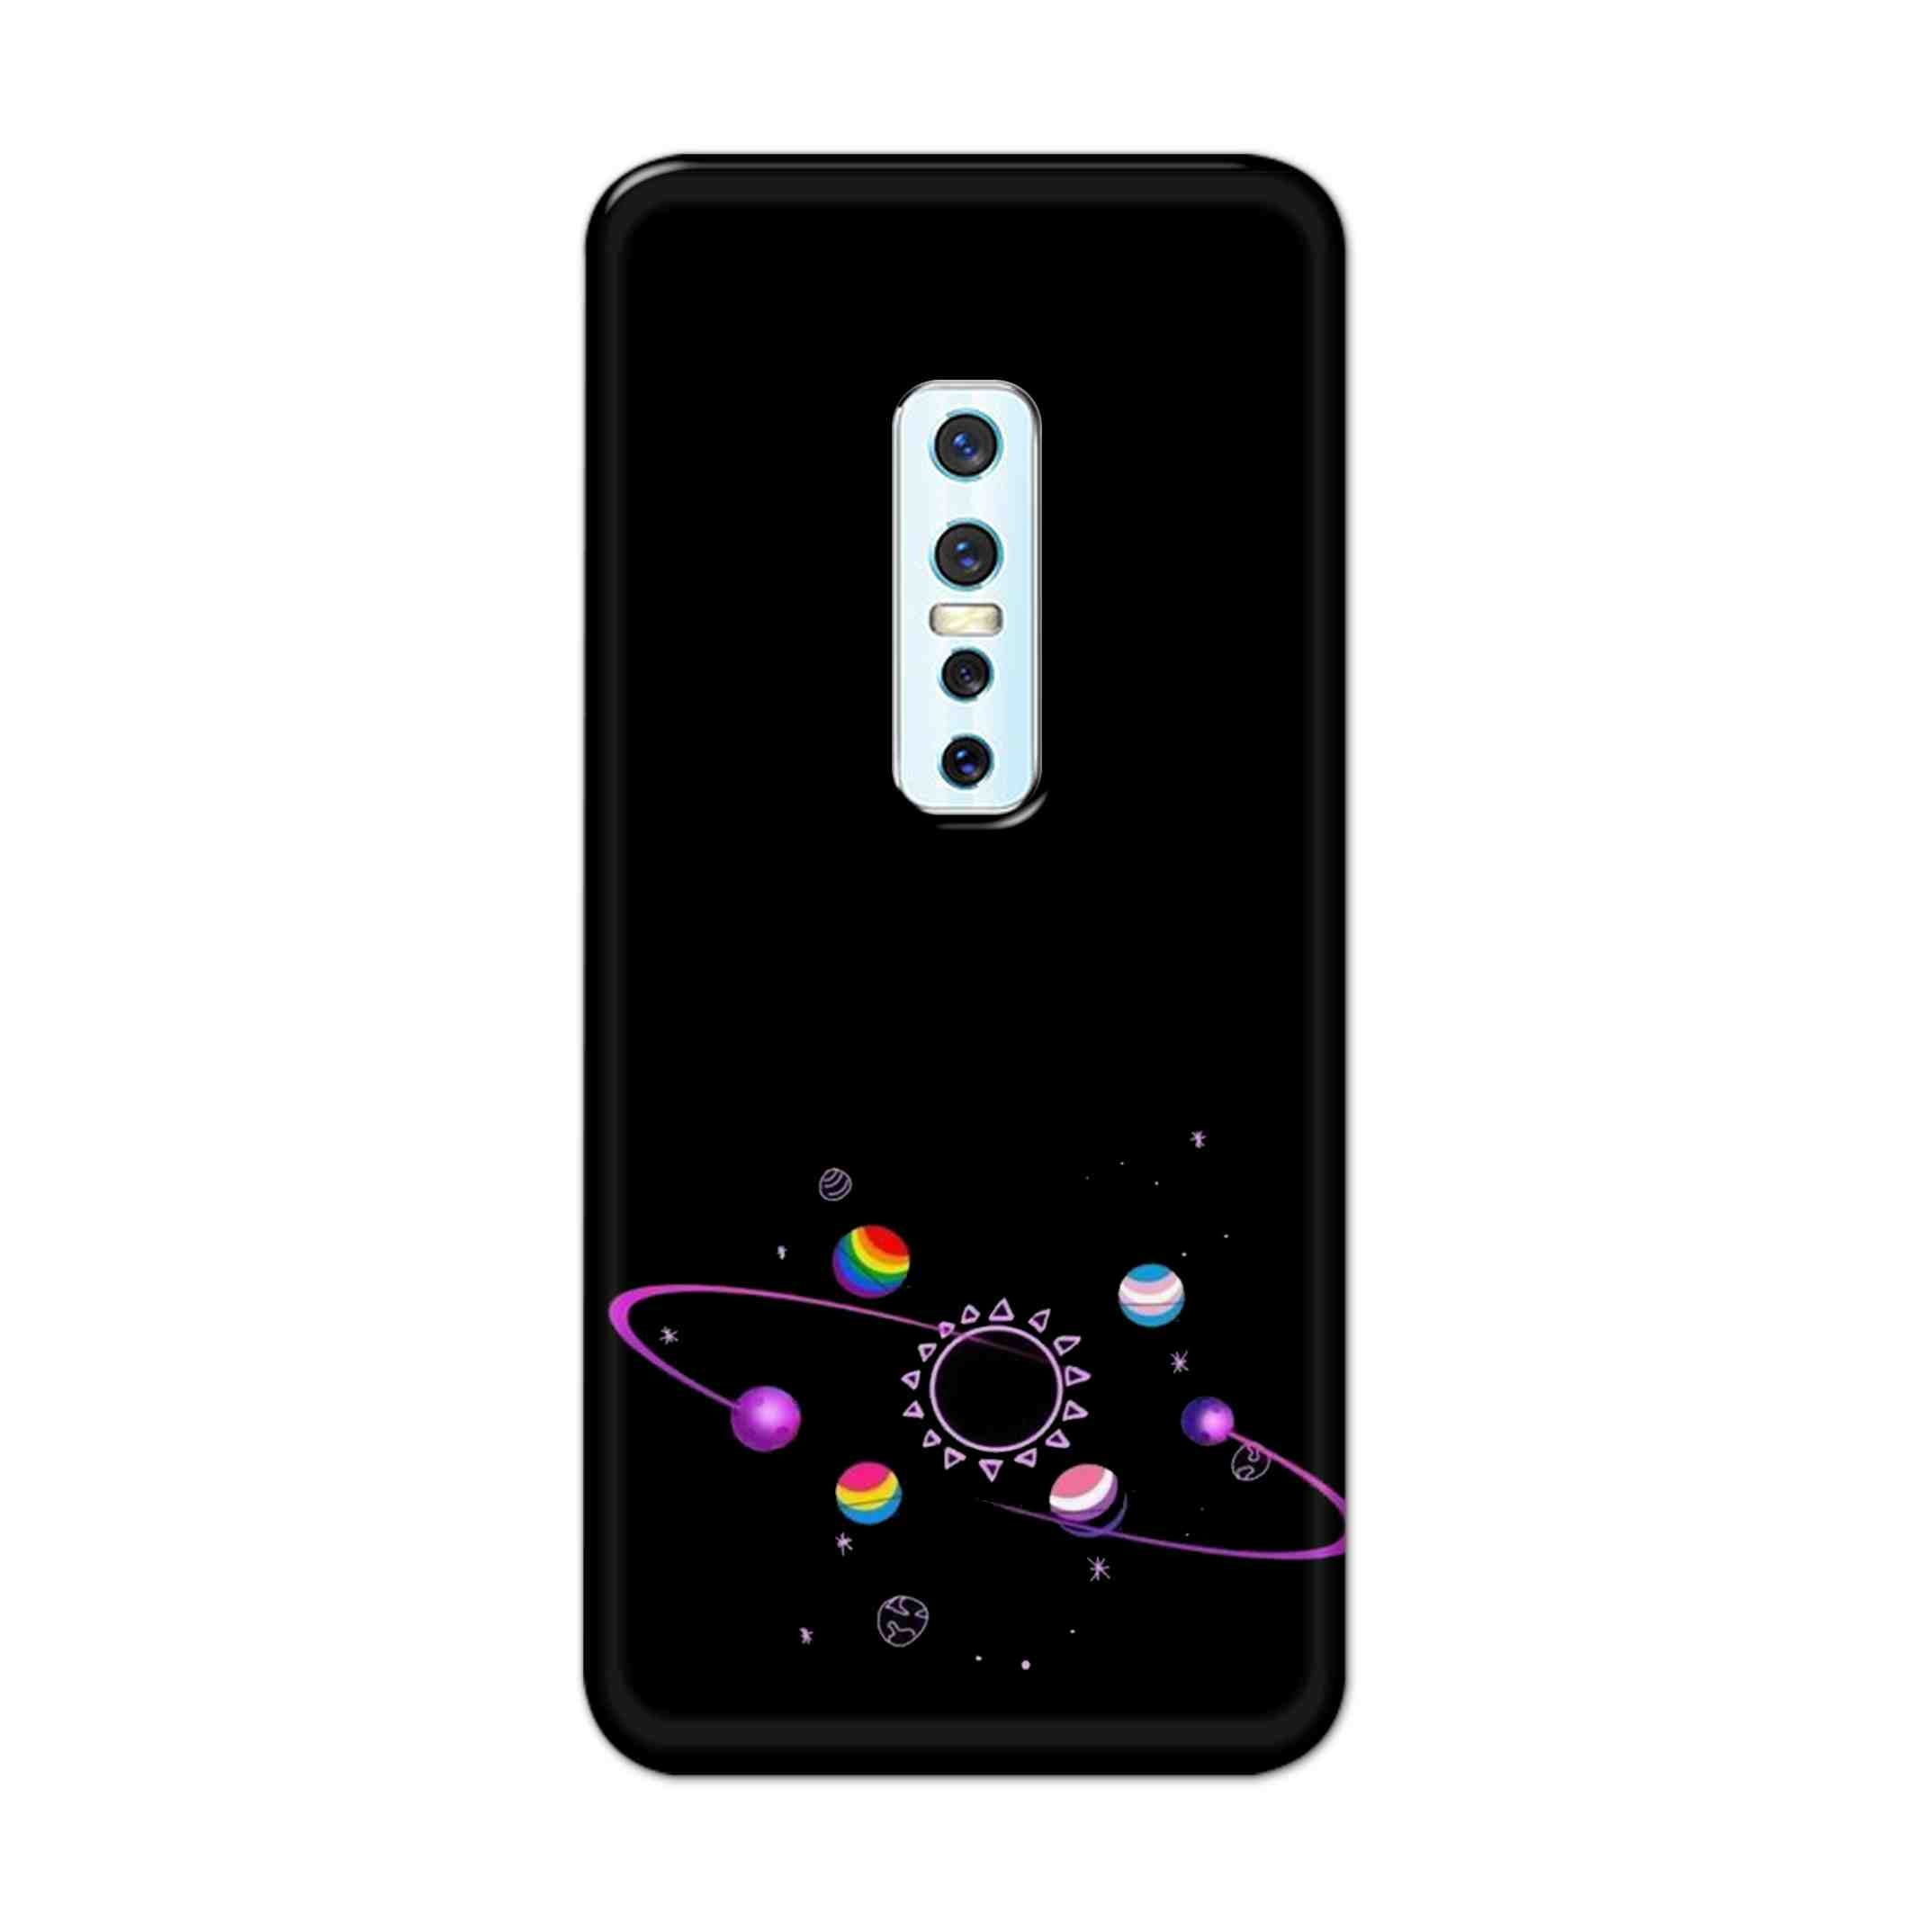 Buy Galaxy Hard Back Mobile Phone Case Cover For Vivo V17 Pro Online